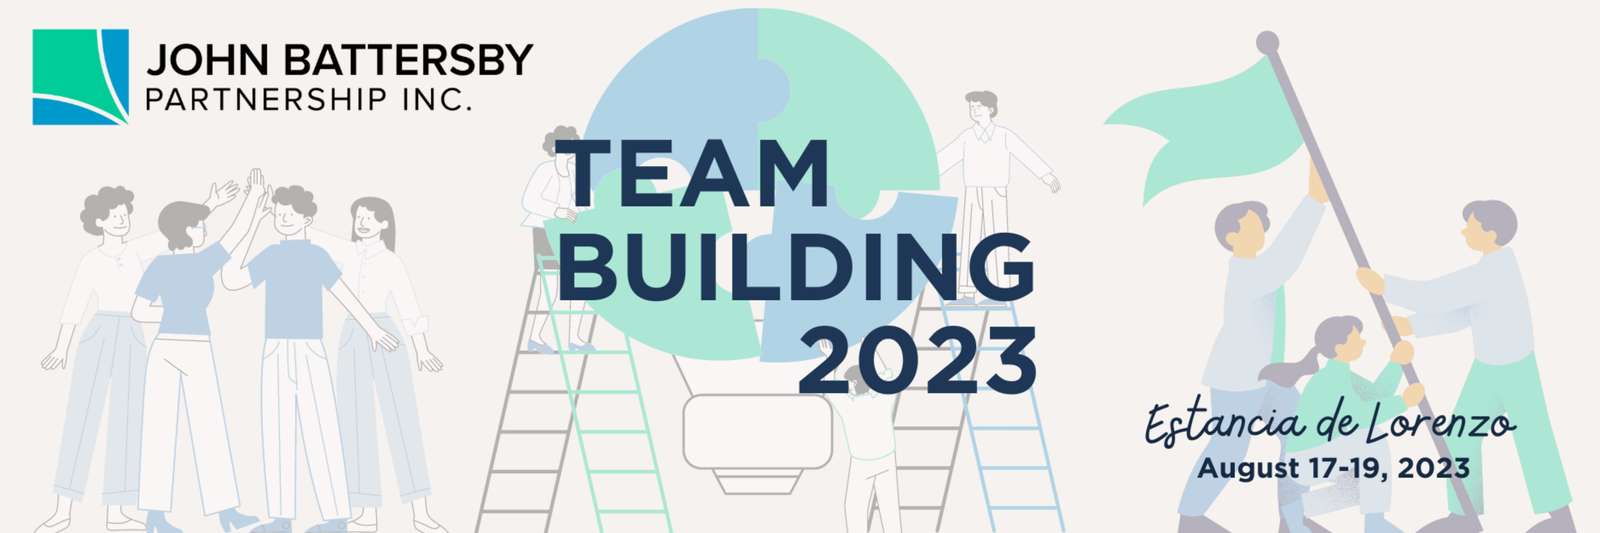 Team building JBPI 2023 puzzle online